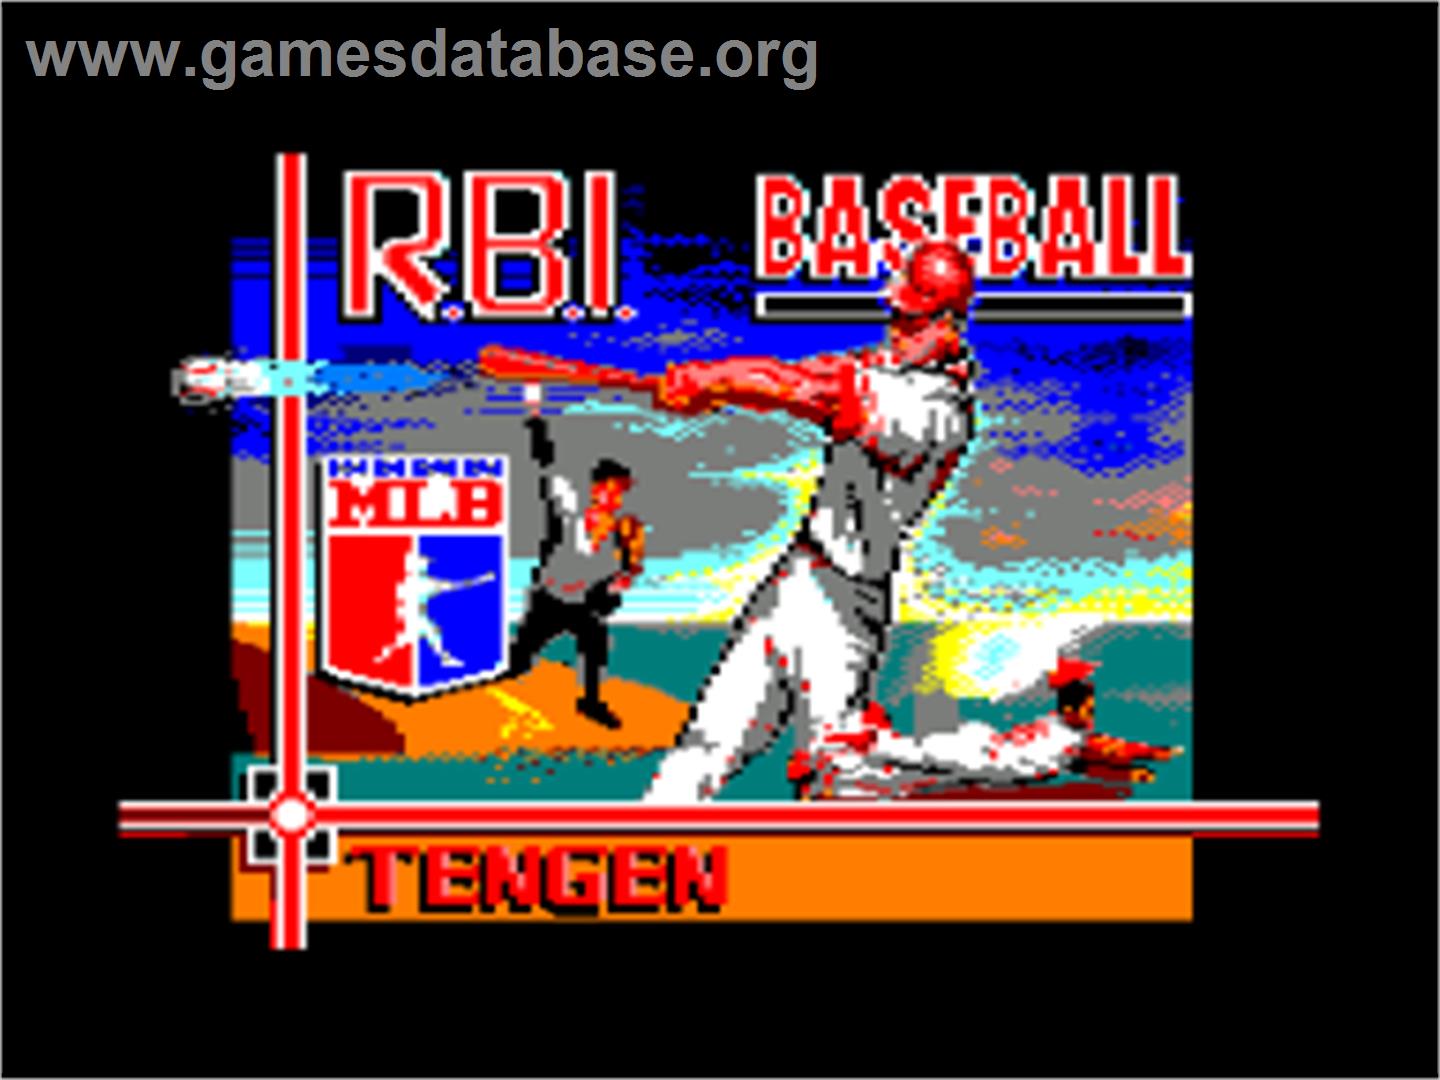 RBI Baseball 2 - Amstrad CPC - Artwork - Title Screen